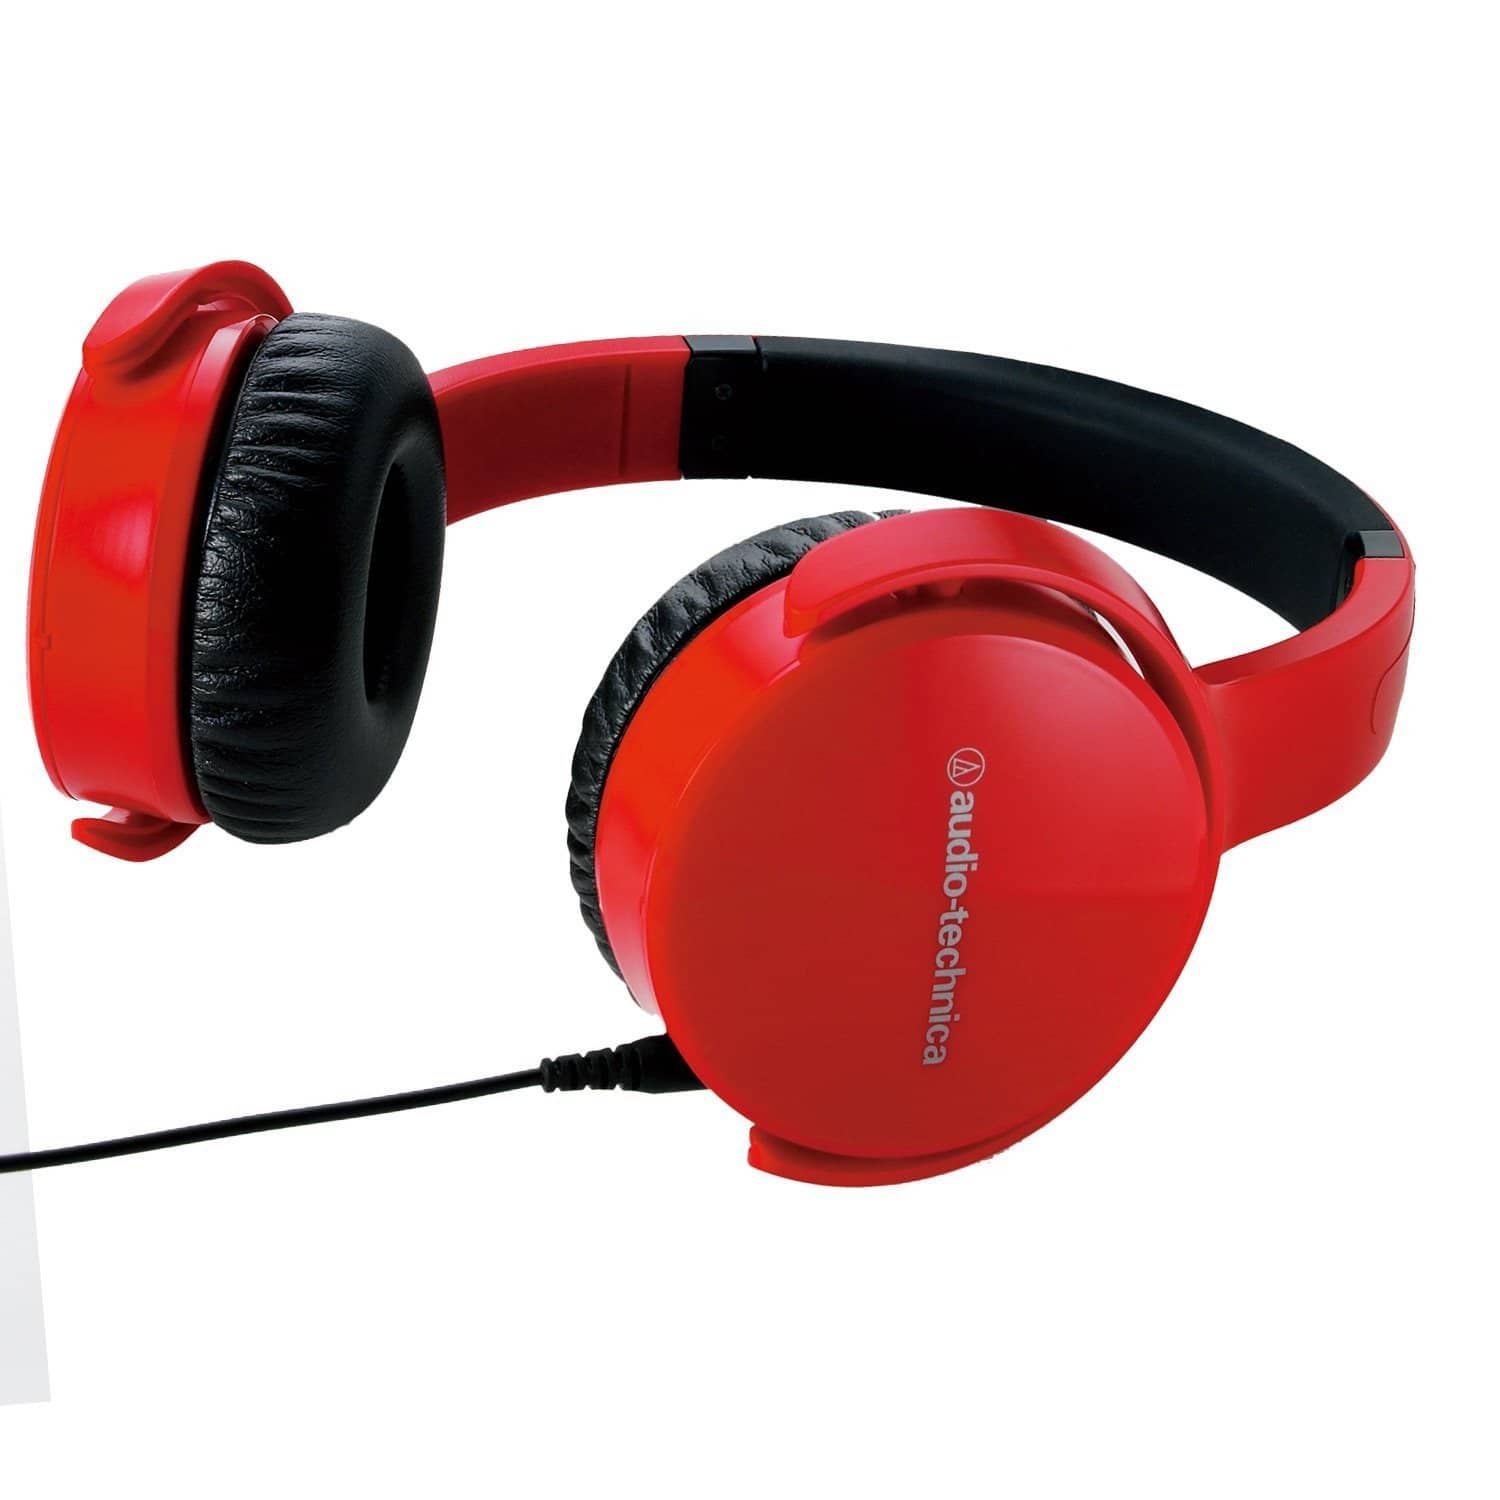 Audio Technica Sonic Fuel ATHOX5BK On-Ear Headphones - Red